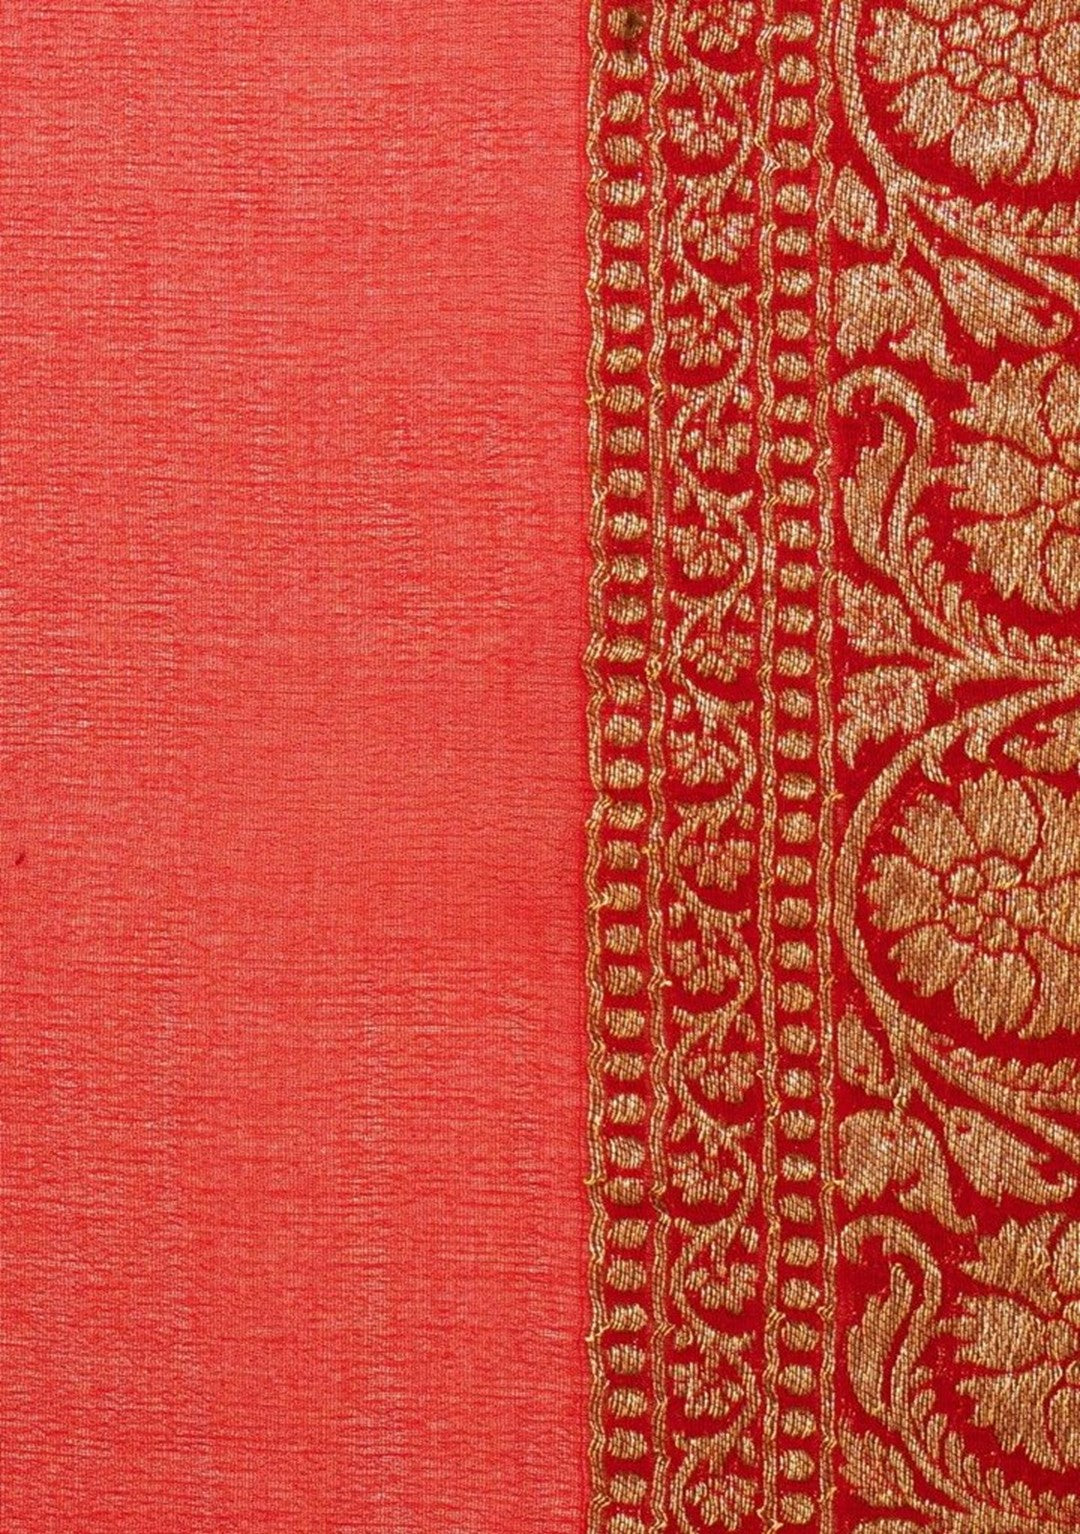 Antique zari work khaddi banarasi saree in the red border in navy blue color